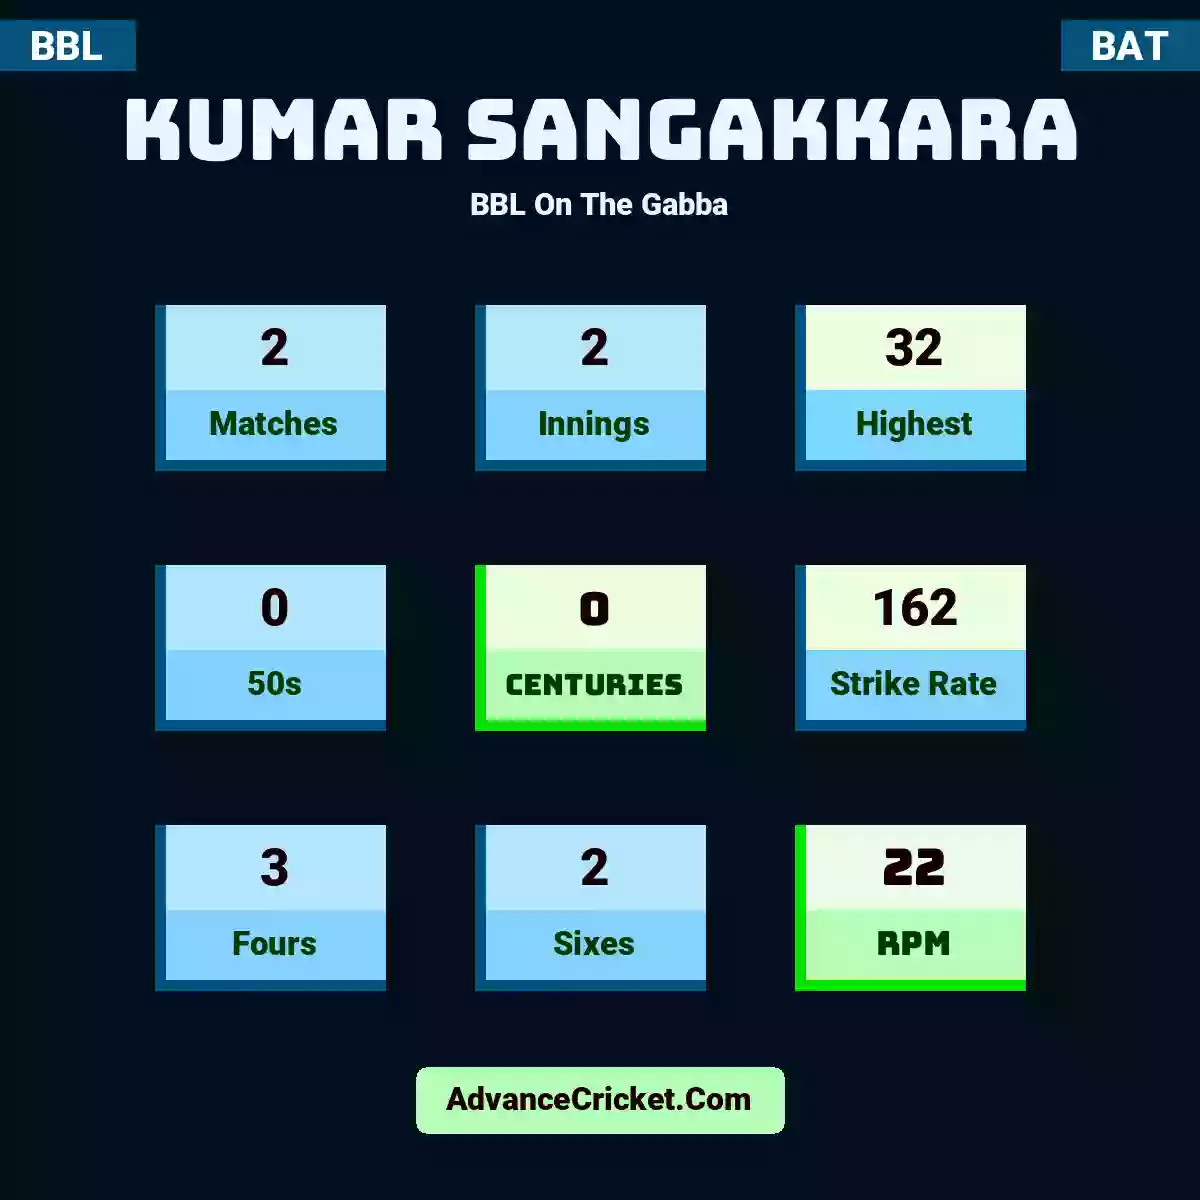 Kumar Sangakkara BBL  On The Gabba, Kumar Sangakkara played 2 matches, scored 32 runs as highest, 0 half-centuries, and 0 centuries, with a strike rate of 162. K.Sangakkara hit 3 fours and 2 sixes, with an RPM of 22.